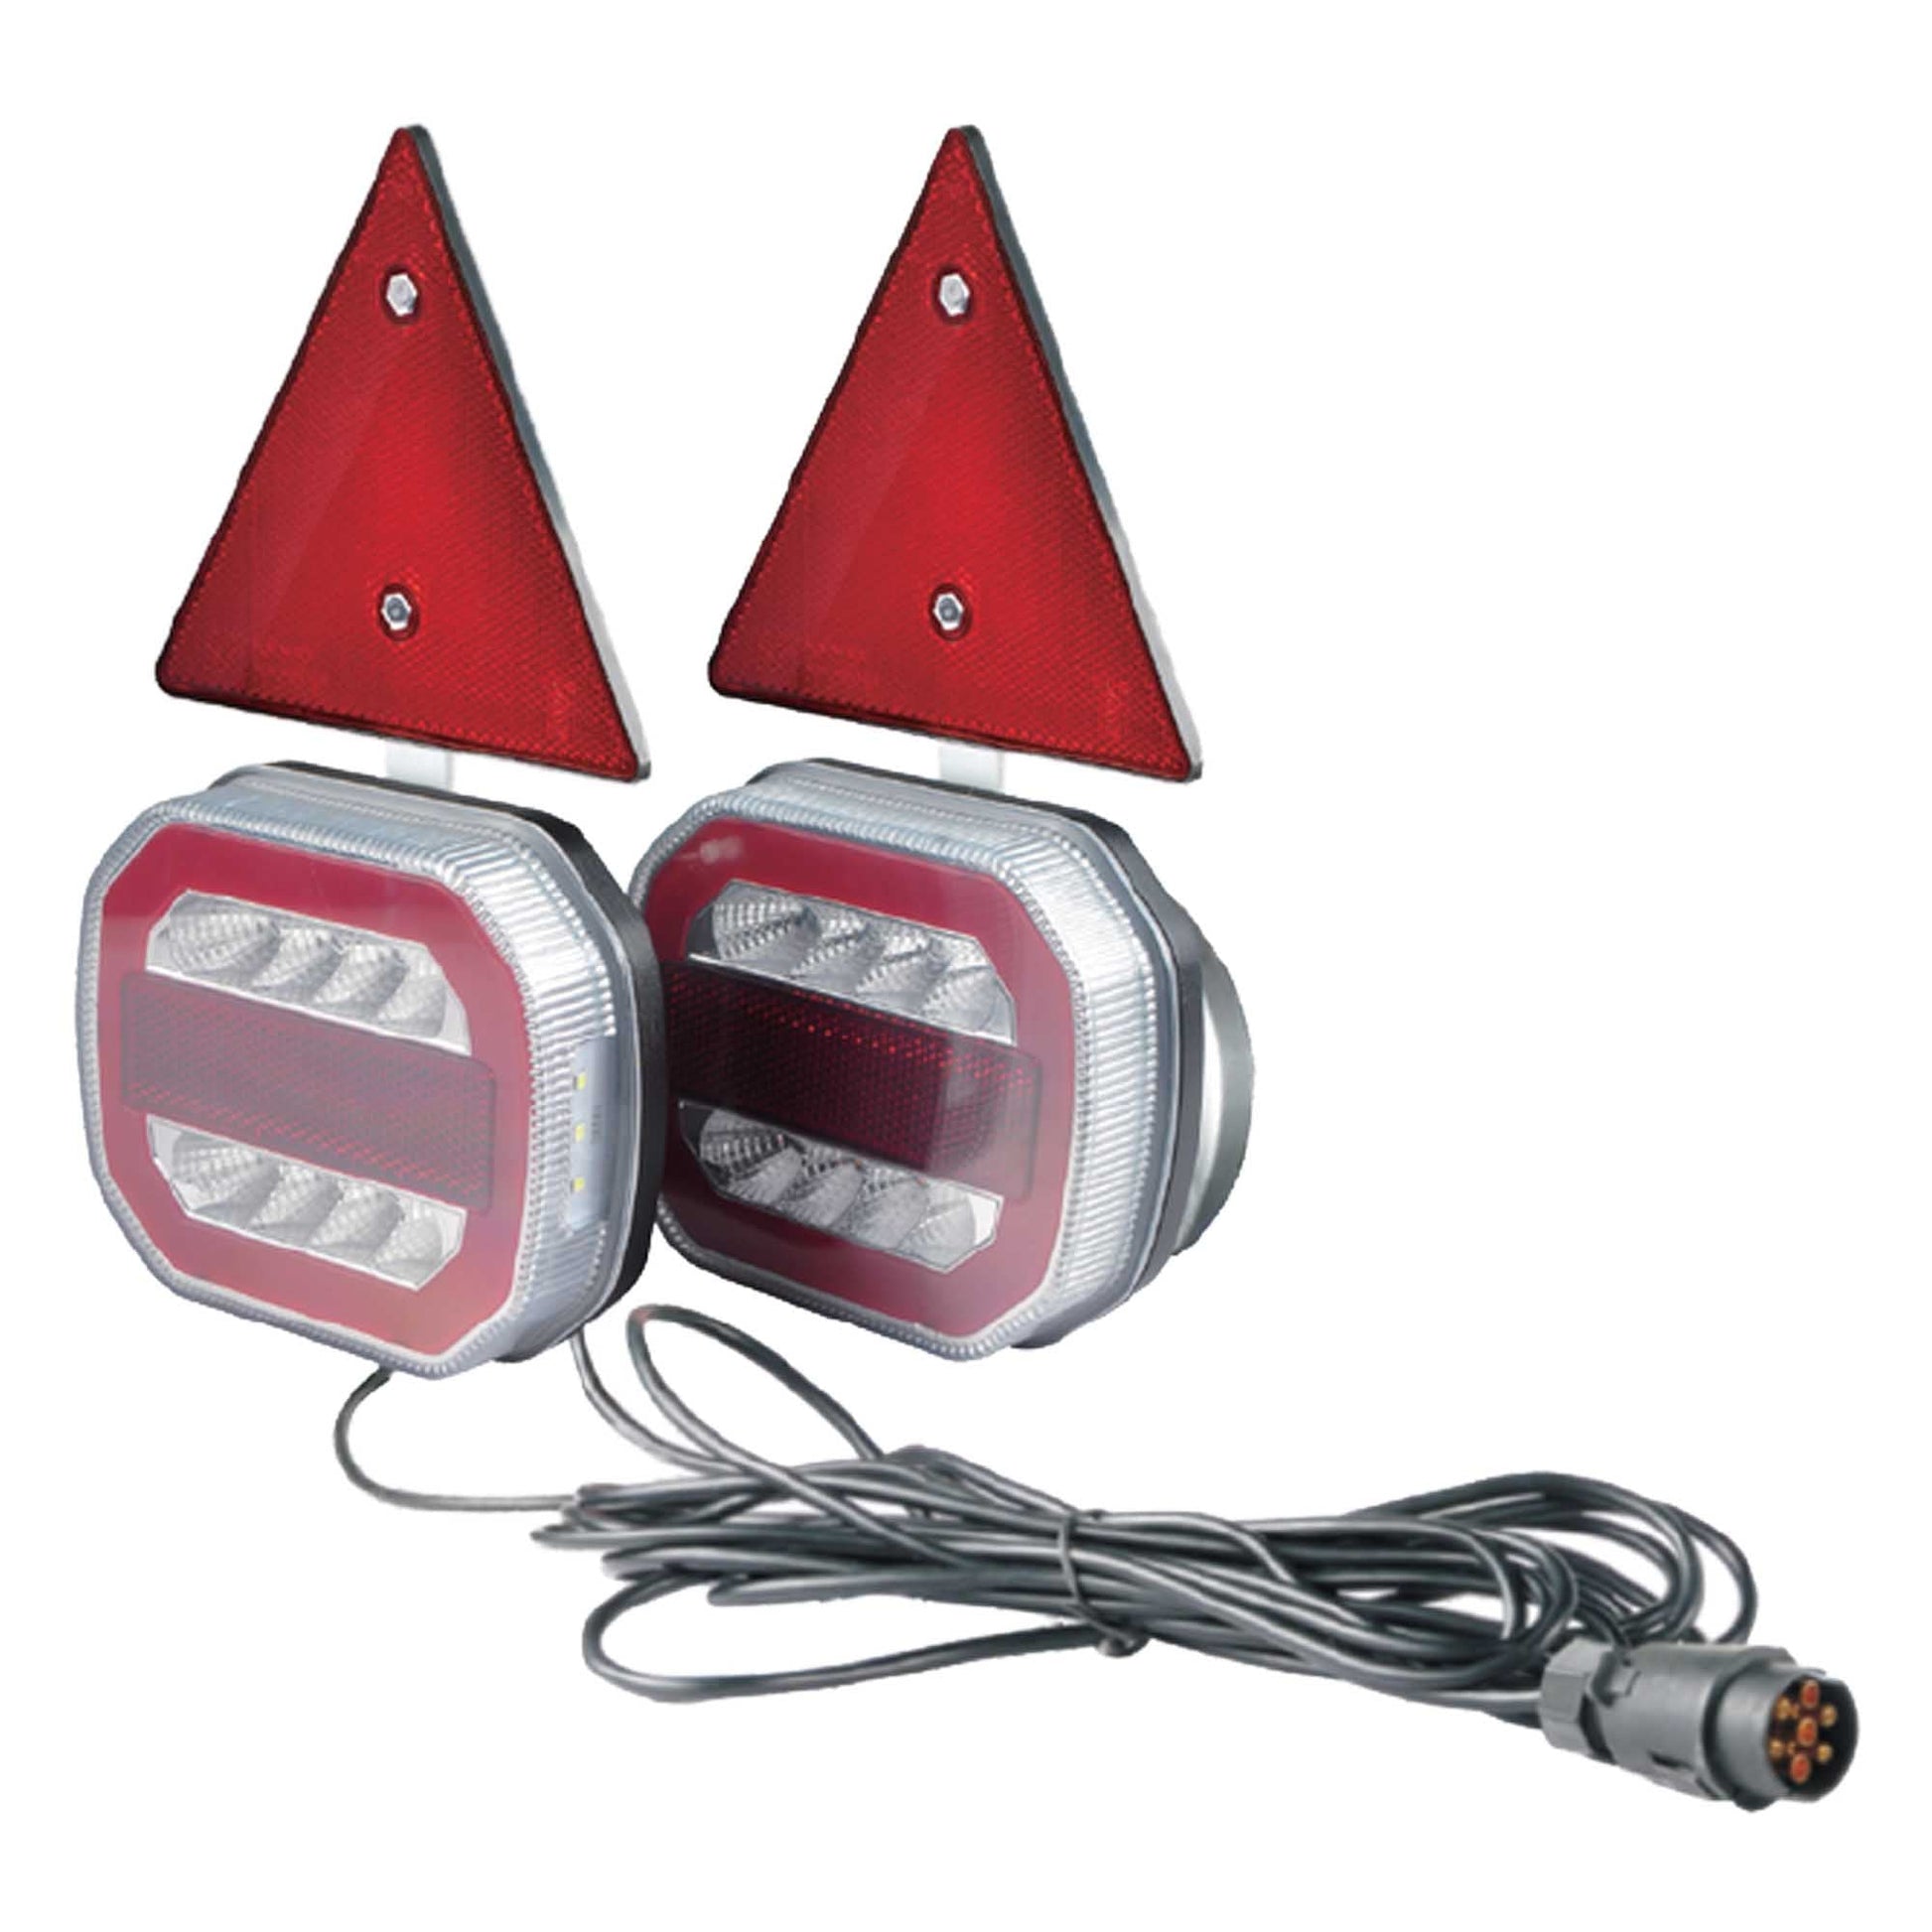 Heckleuchte LED für PKW Anhänger 12/24V. ET-Anhängertechnik